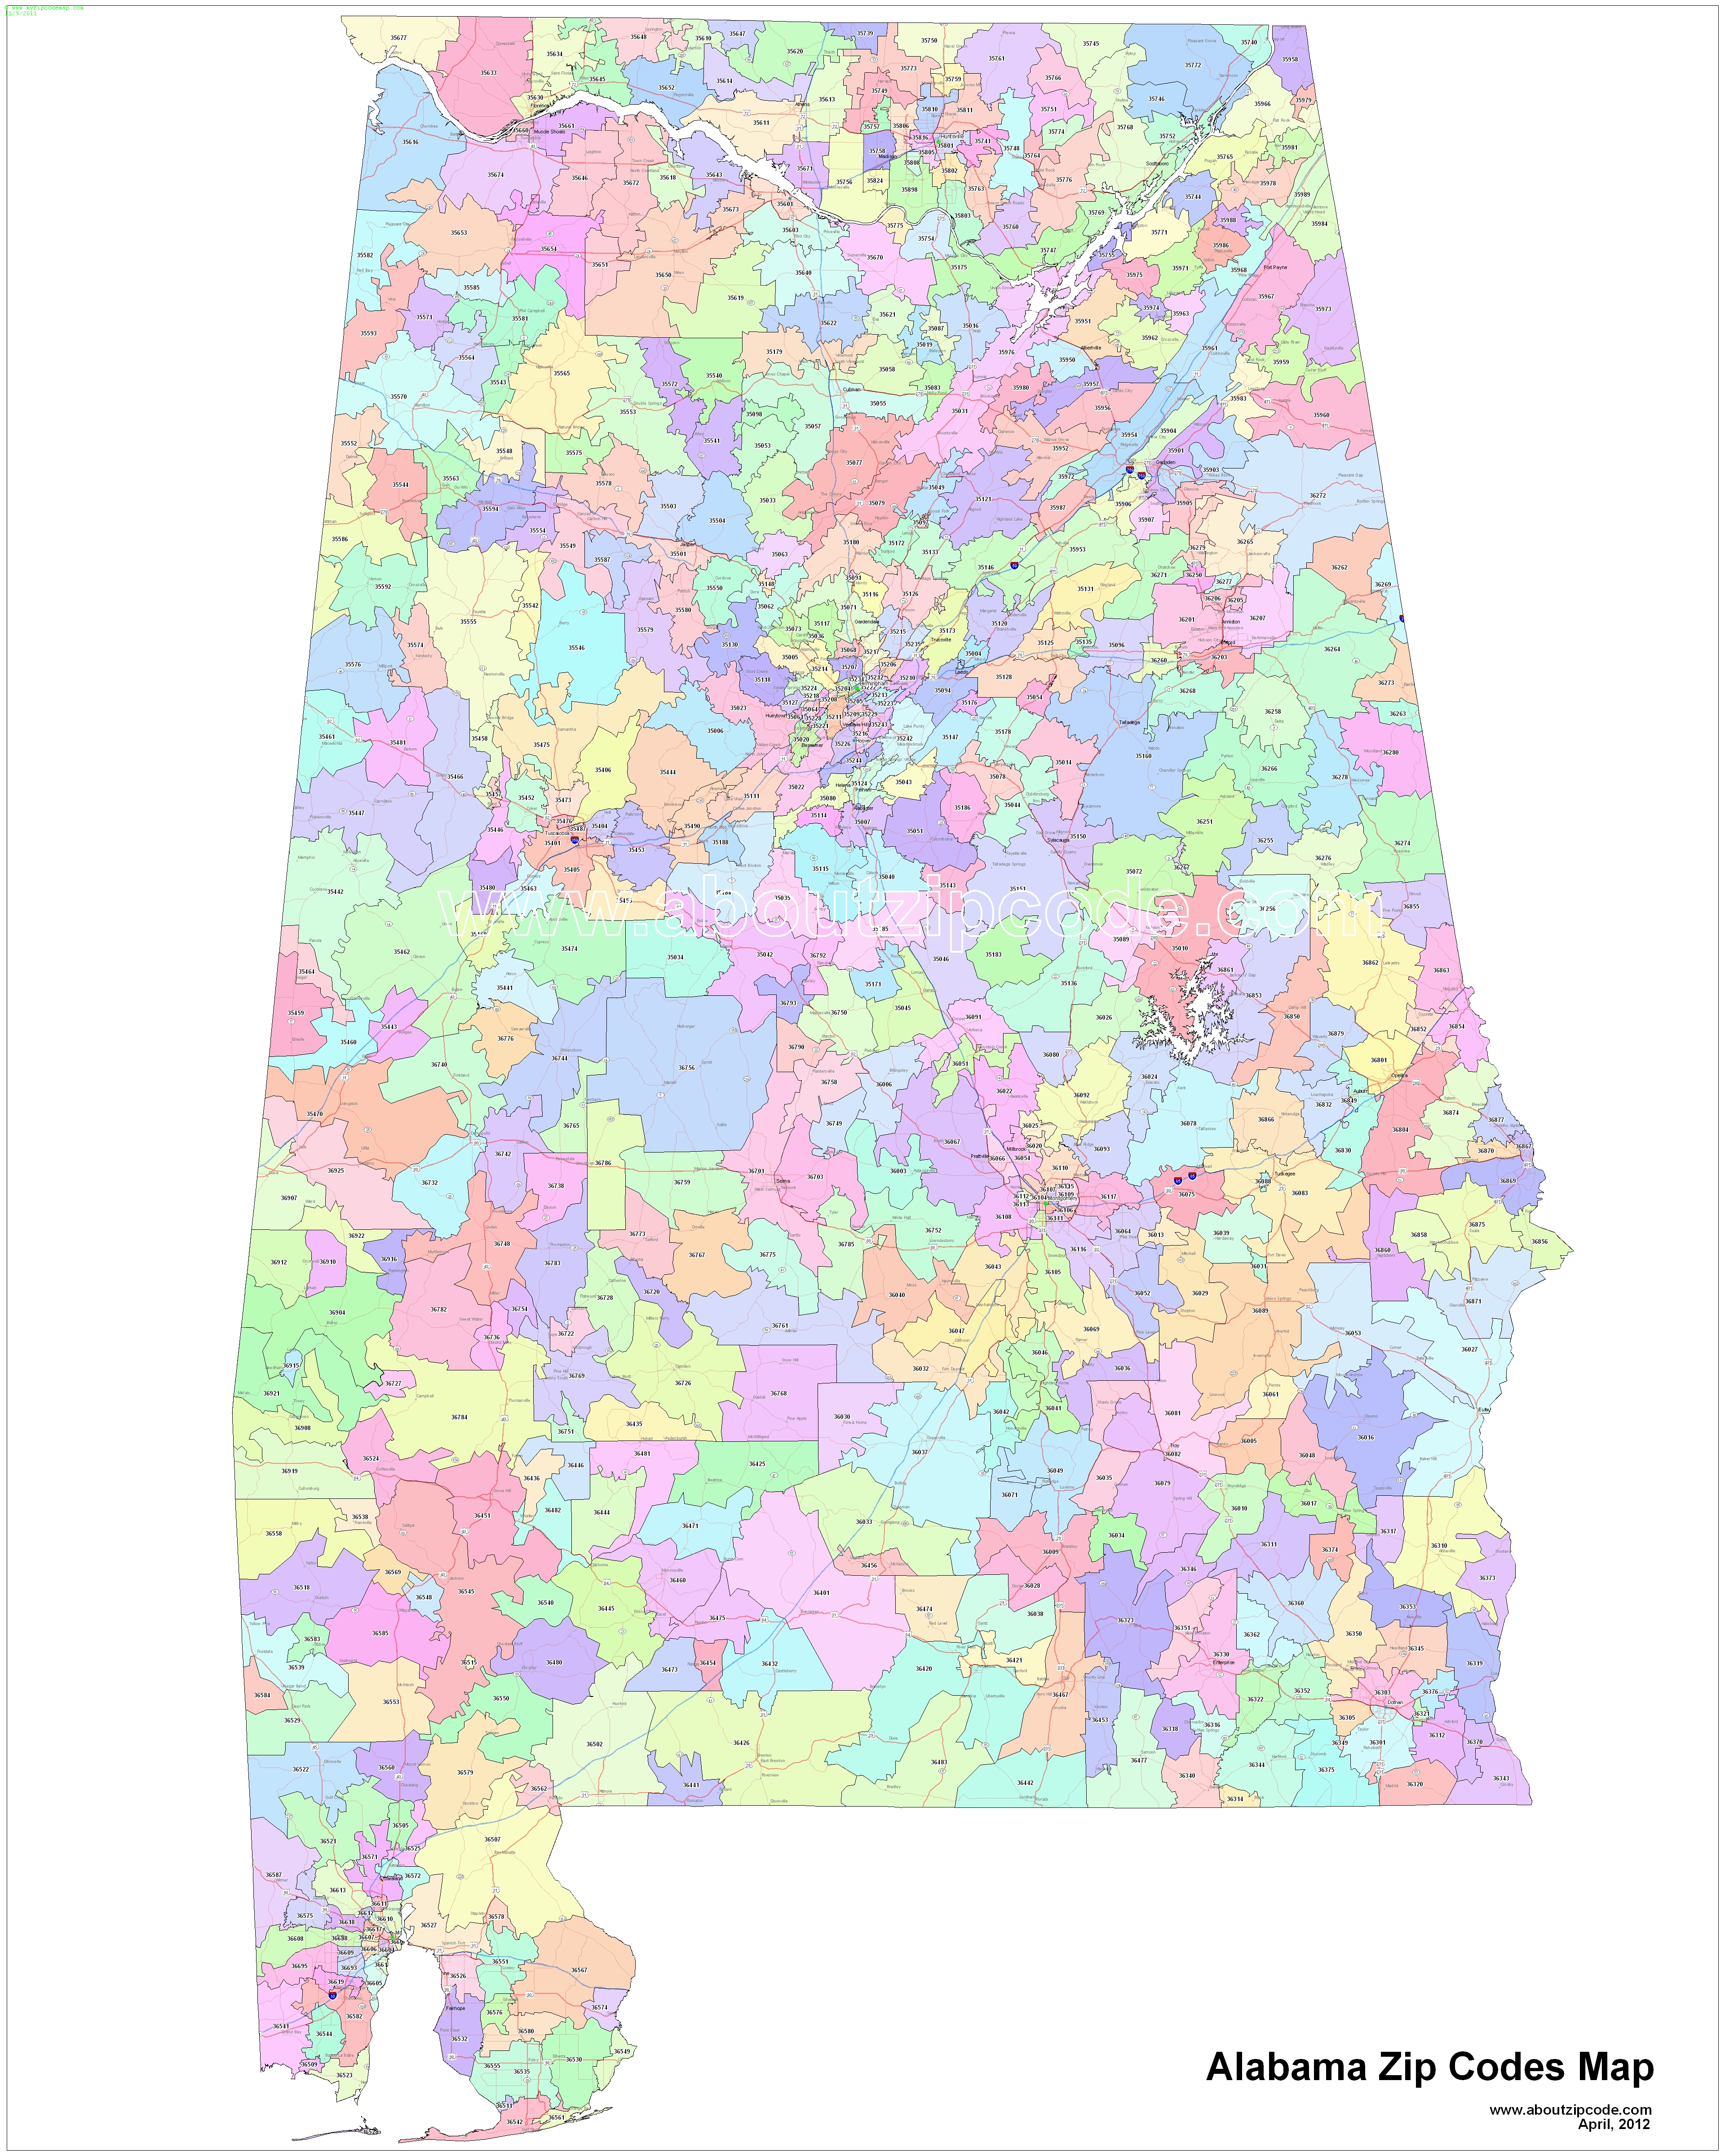 Alabama Zip Code Maps Free Alabama Zip Code Maps